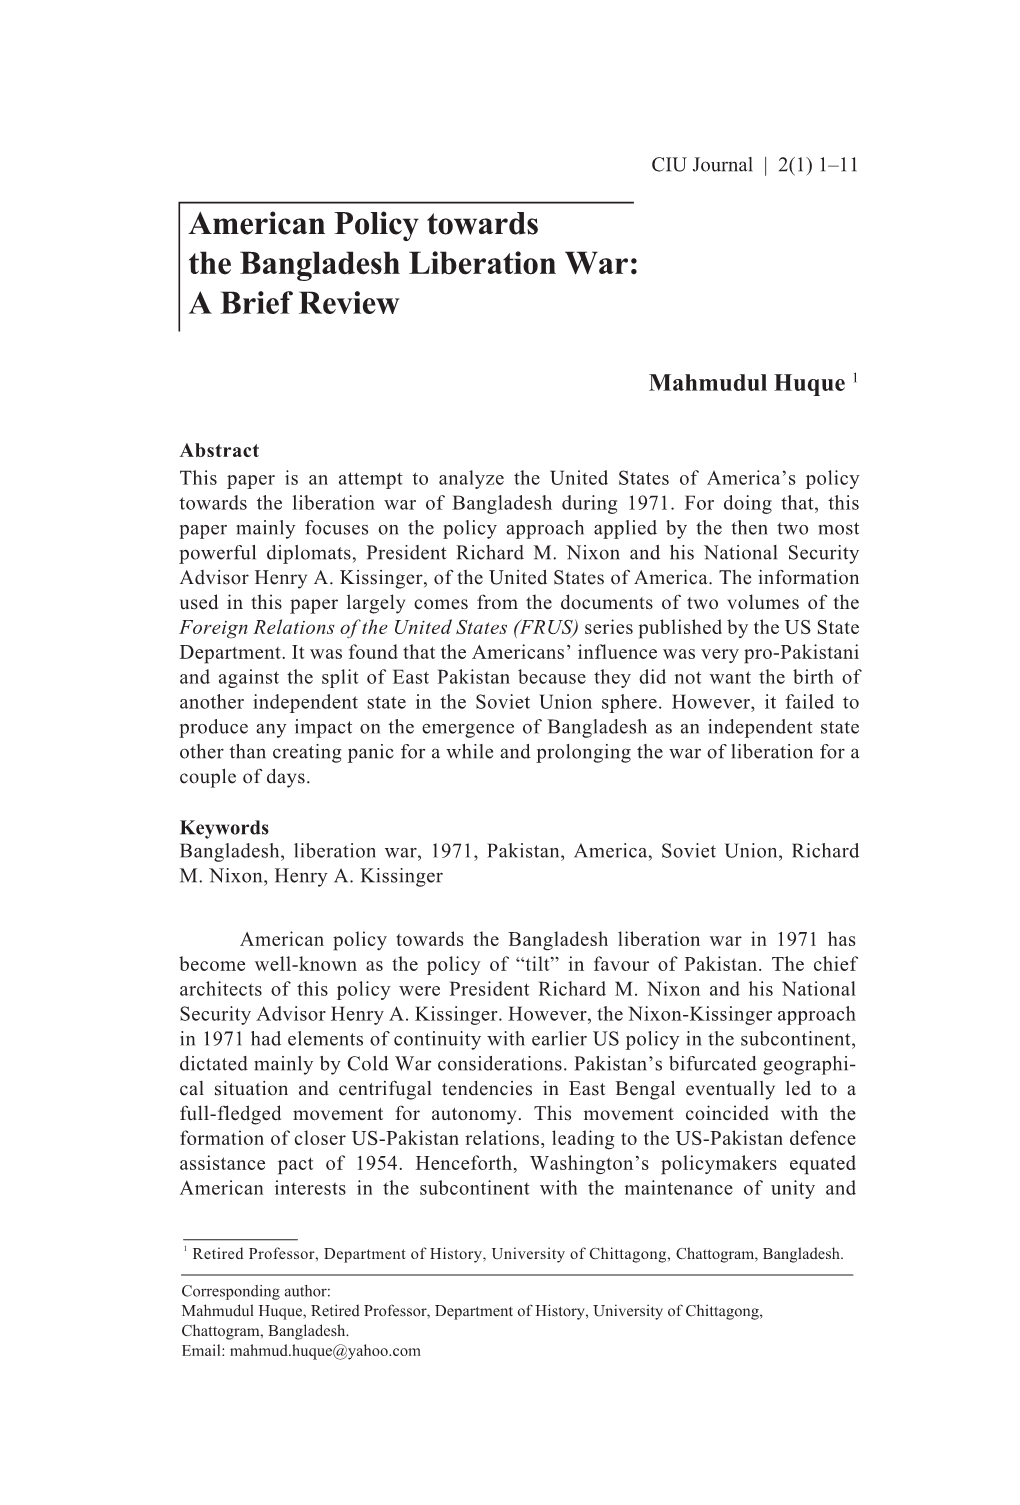 American Policy Towards the Bangladesh Liberation War: a Brief Review